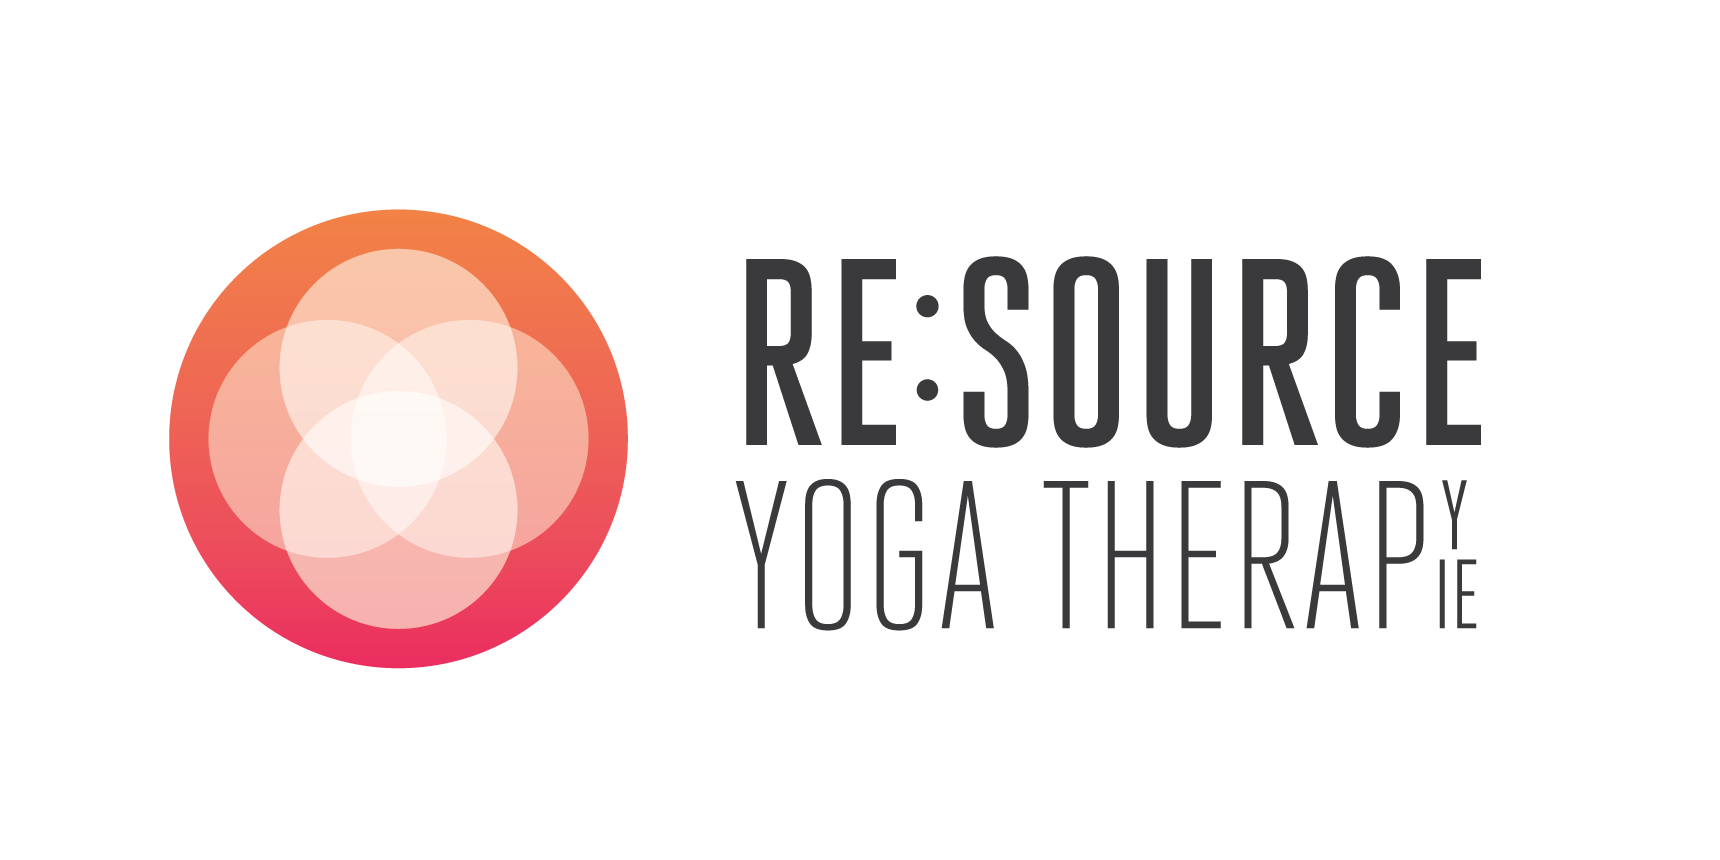 Re:source Yoga Therapy Carina Raisman